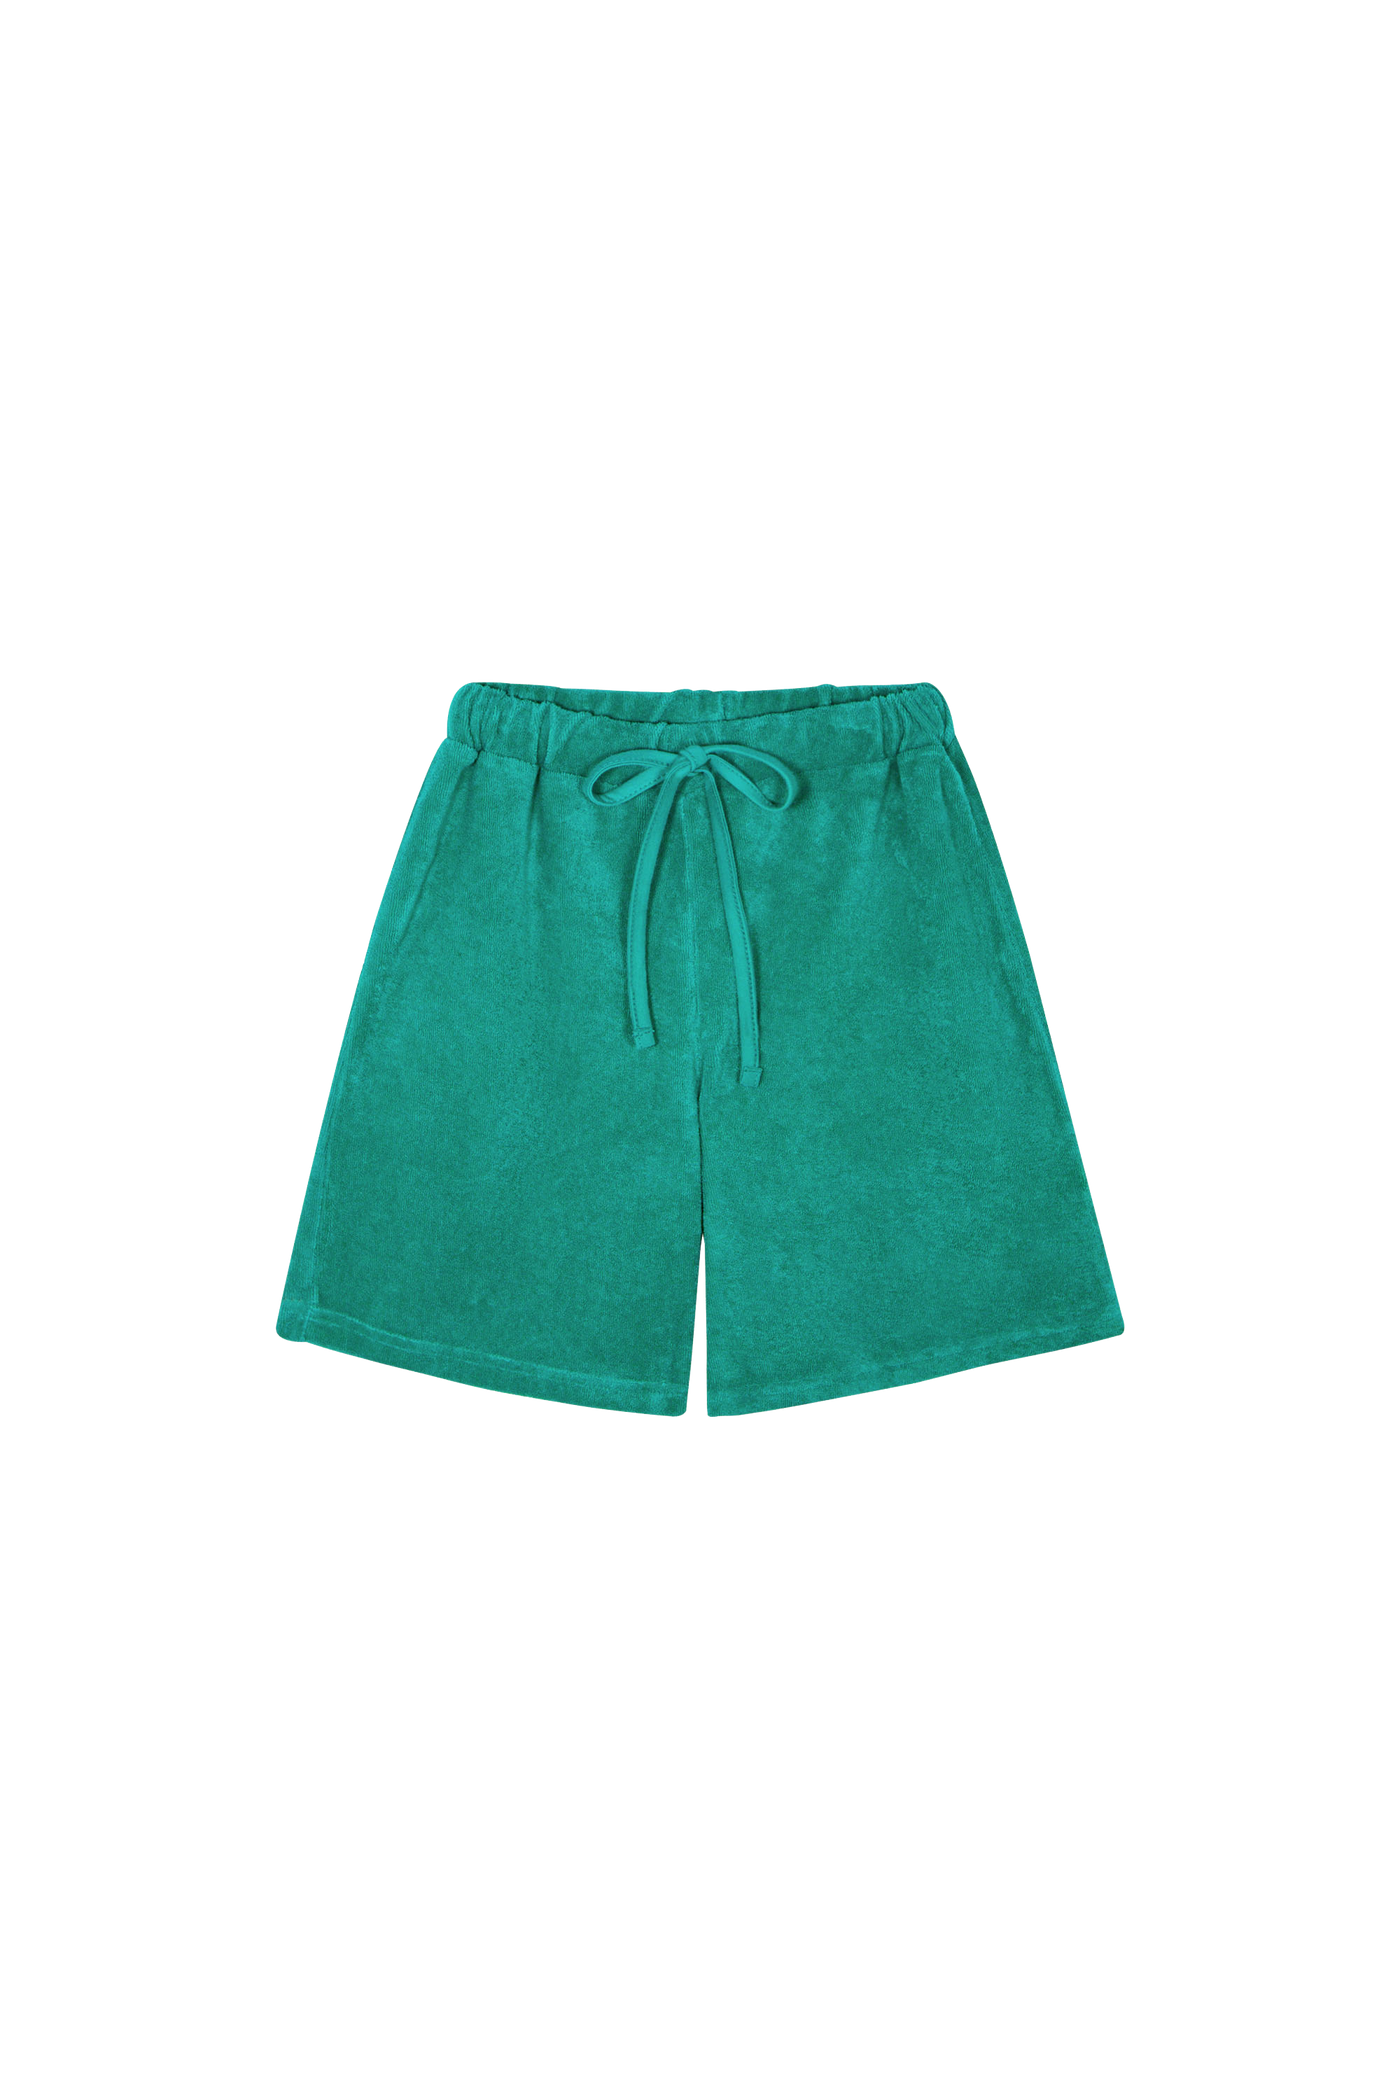 The Campamento green terry shorts